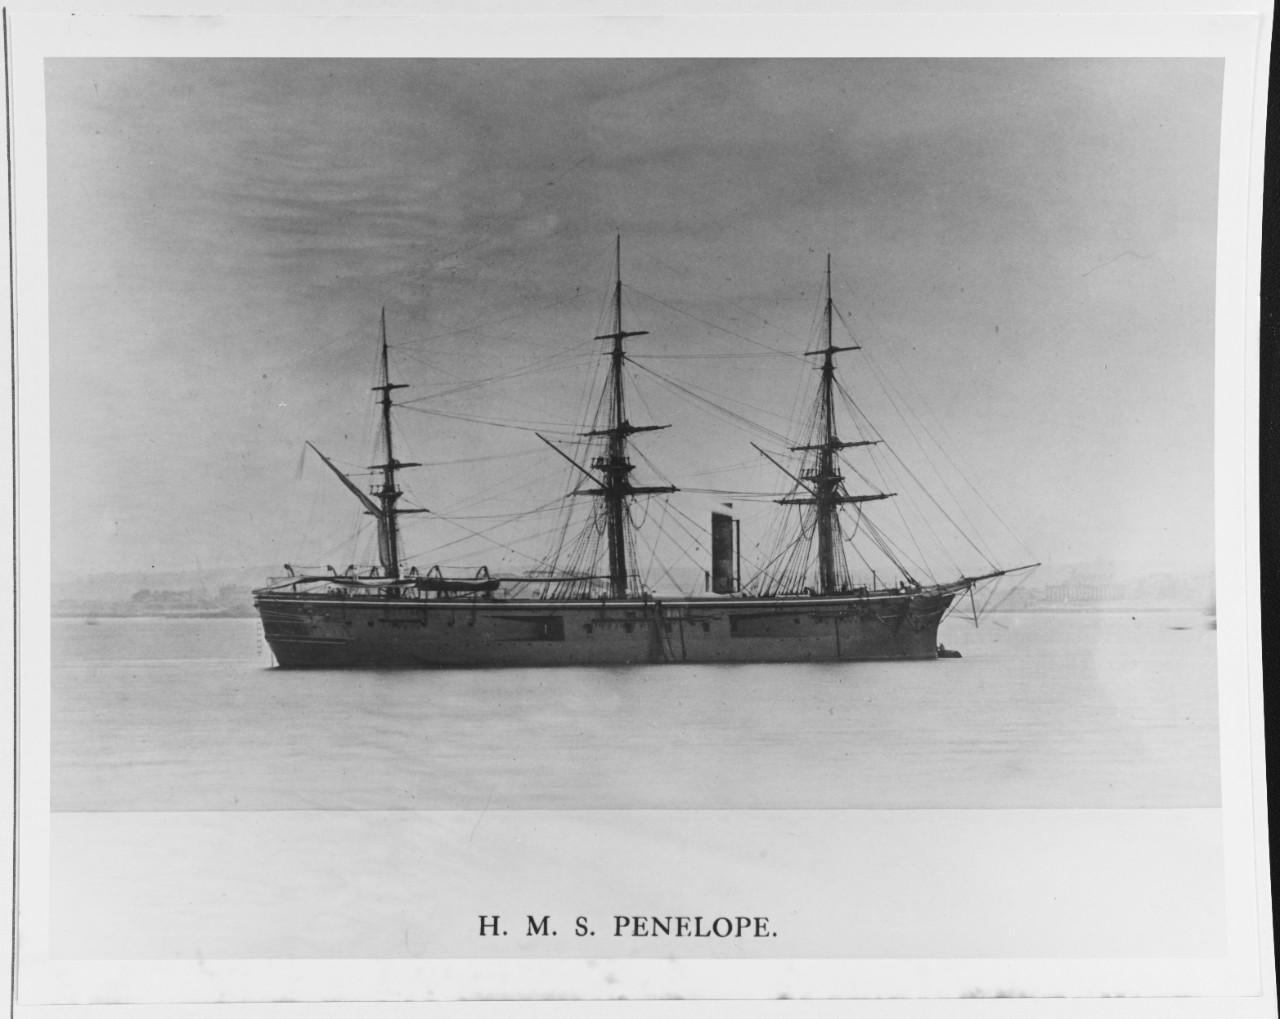 HMS PENELOPE (BRITISH IRONCLAD, 1867)